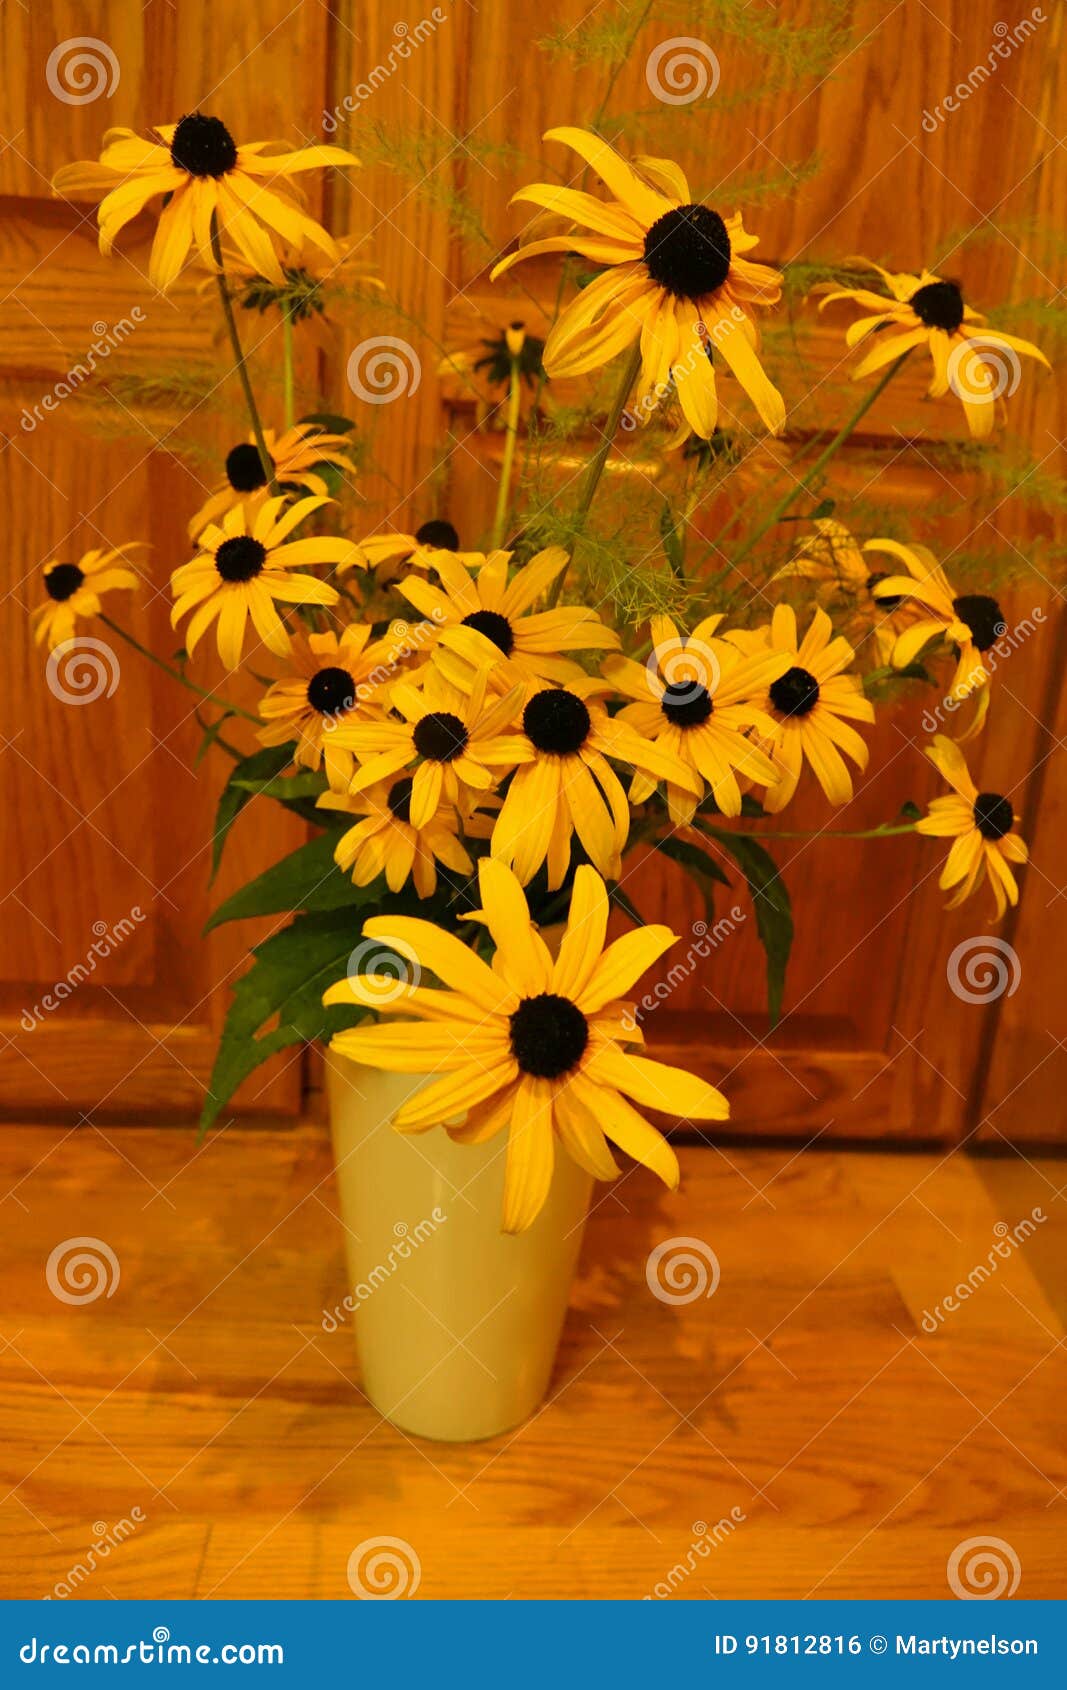 Black Eyed Susans Provide A Beautiful Summer Bouquet Stock Photo Image Of Seasons Provide 91812816